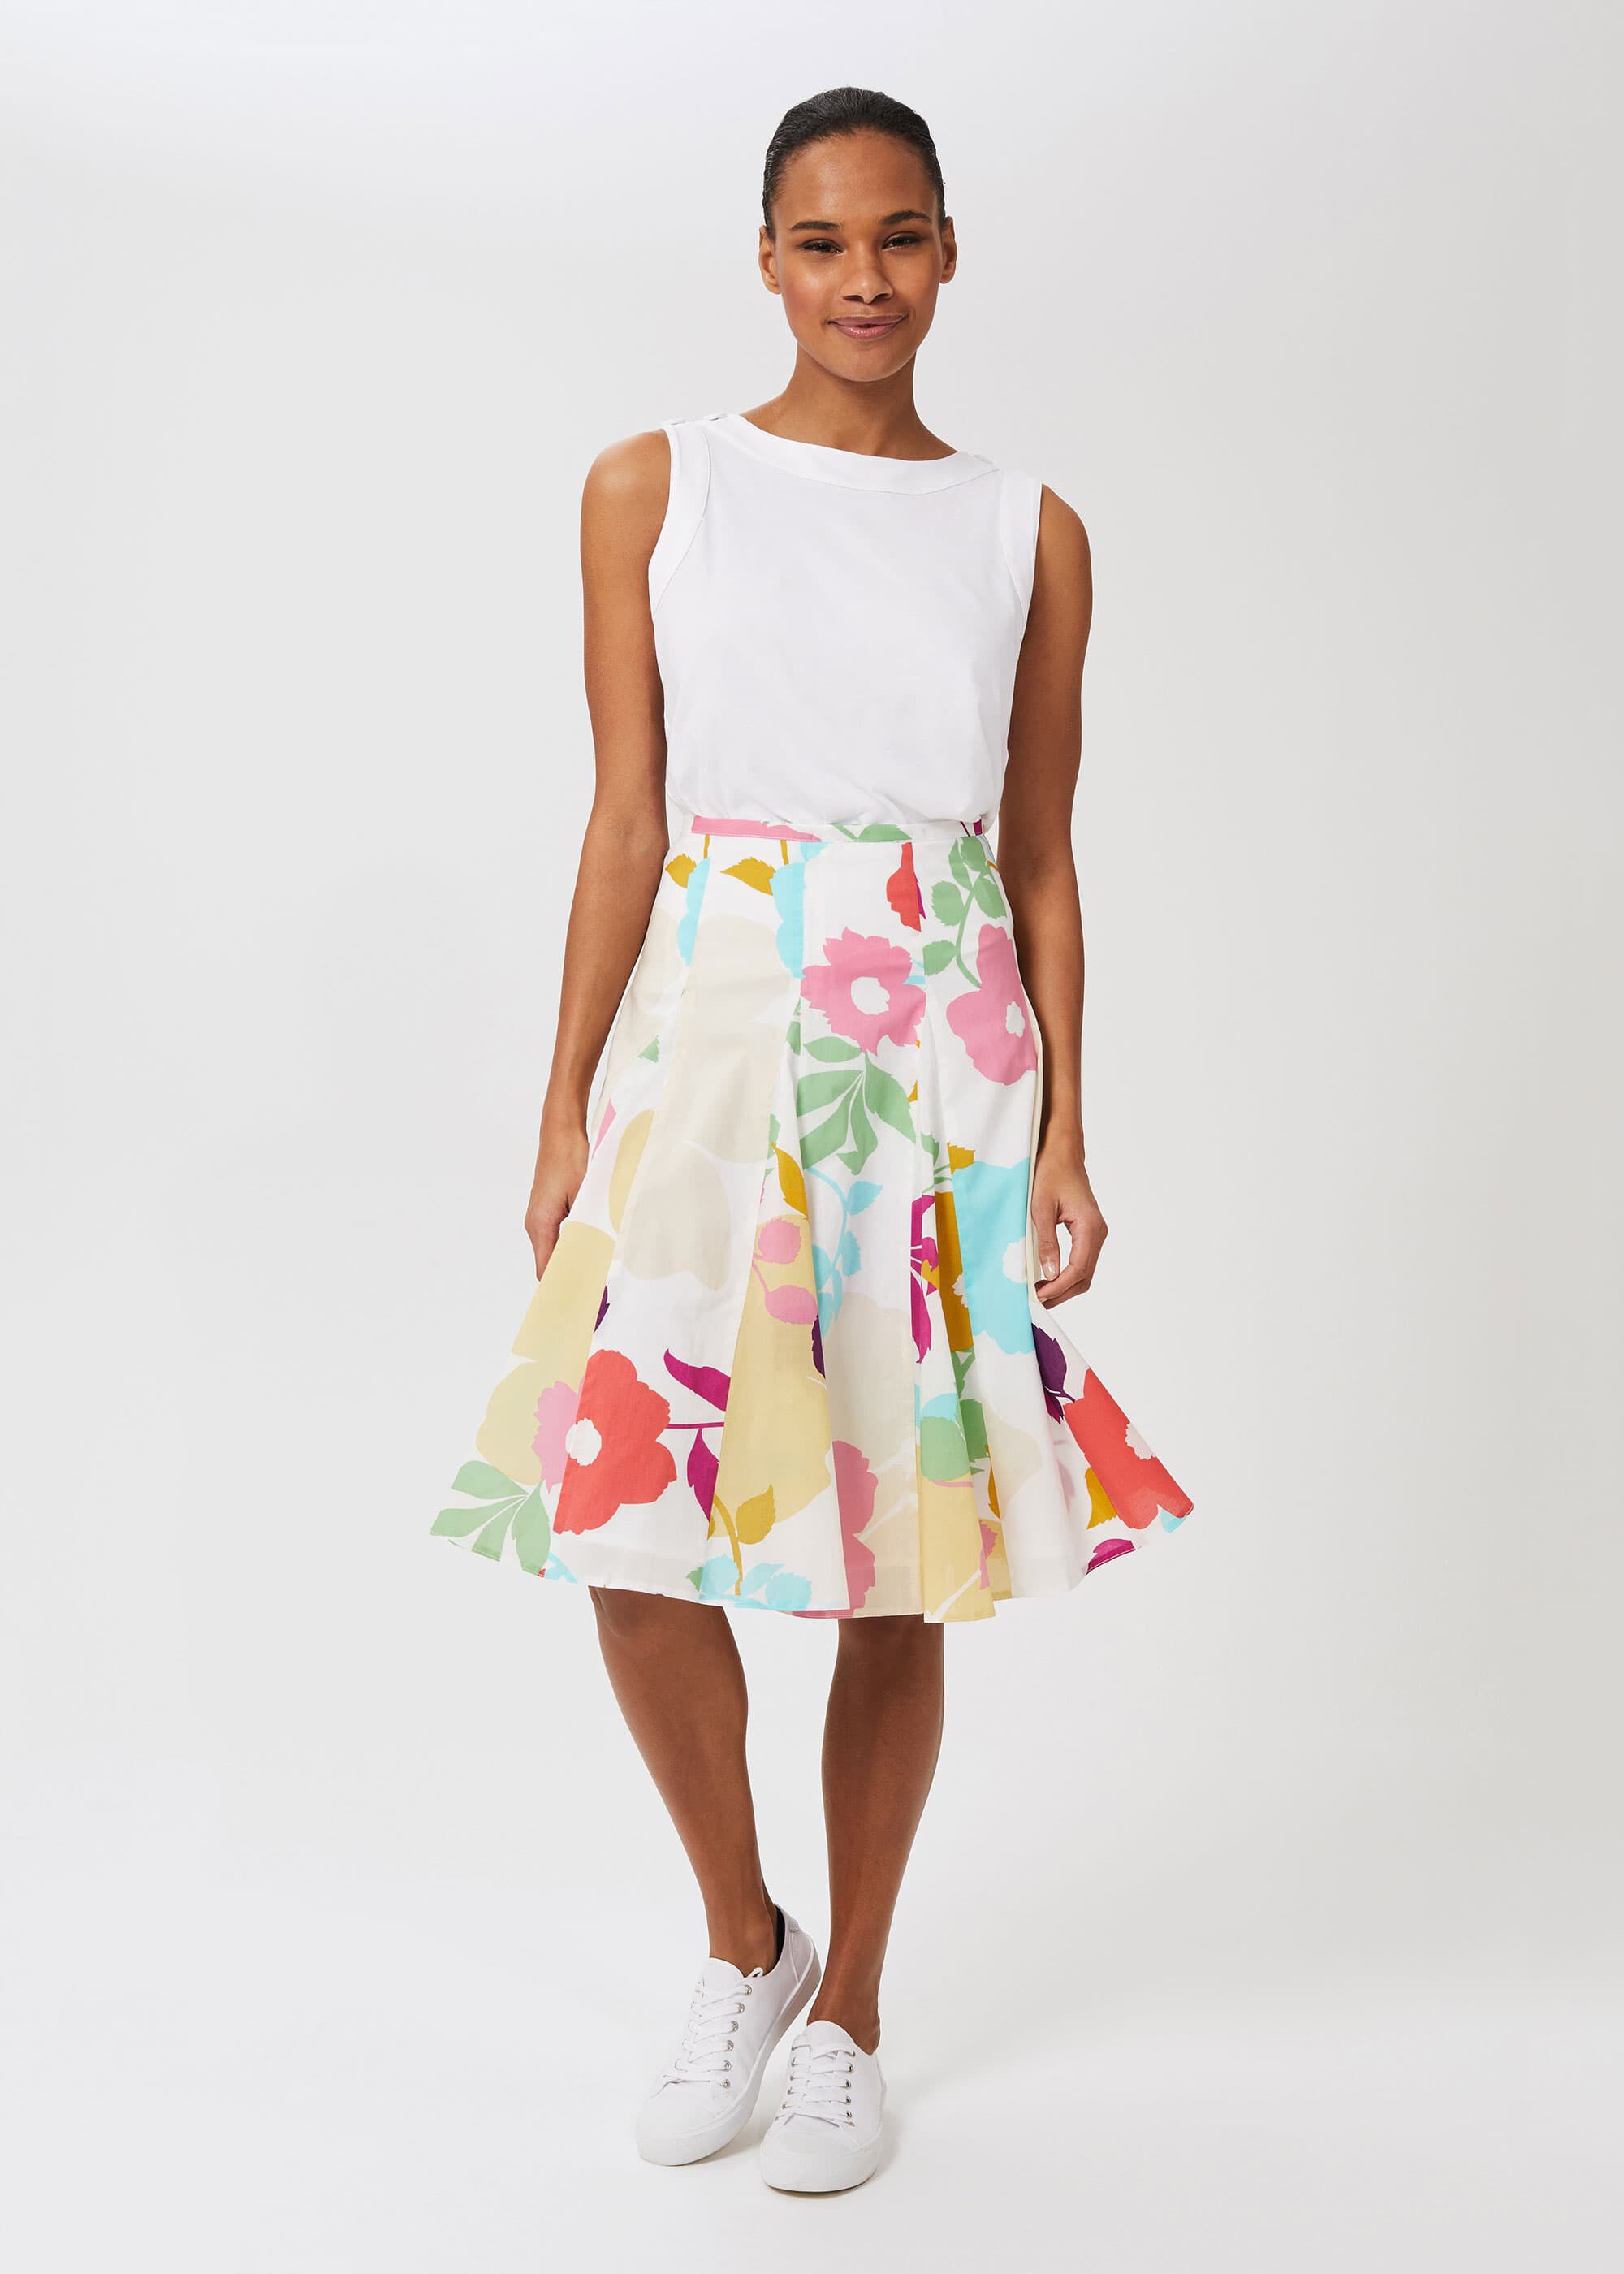 cotton floral skirt